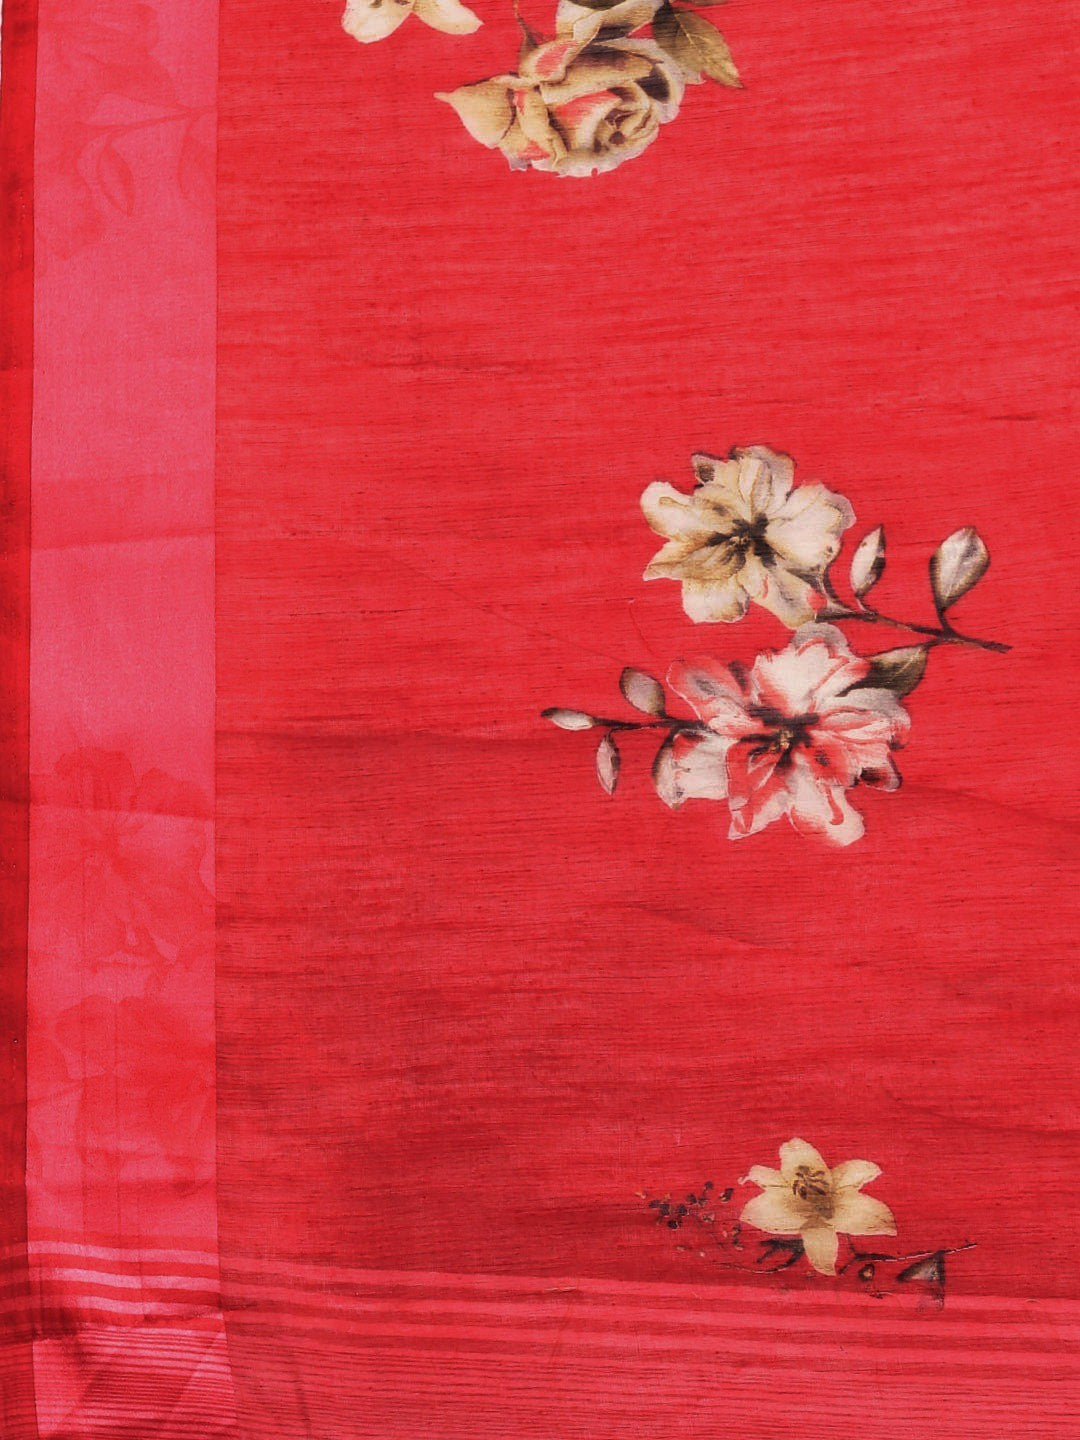 Red Art Silk Printed Classy Saree